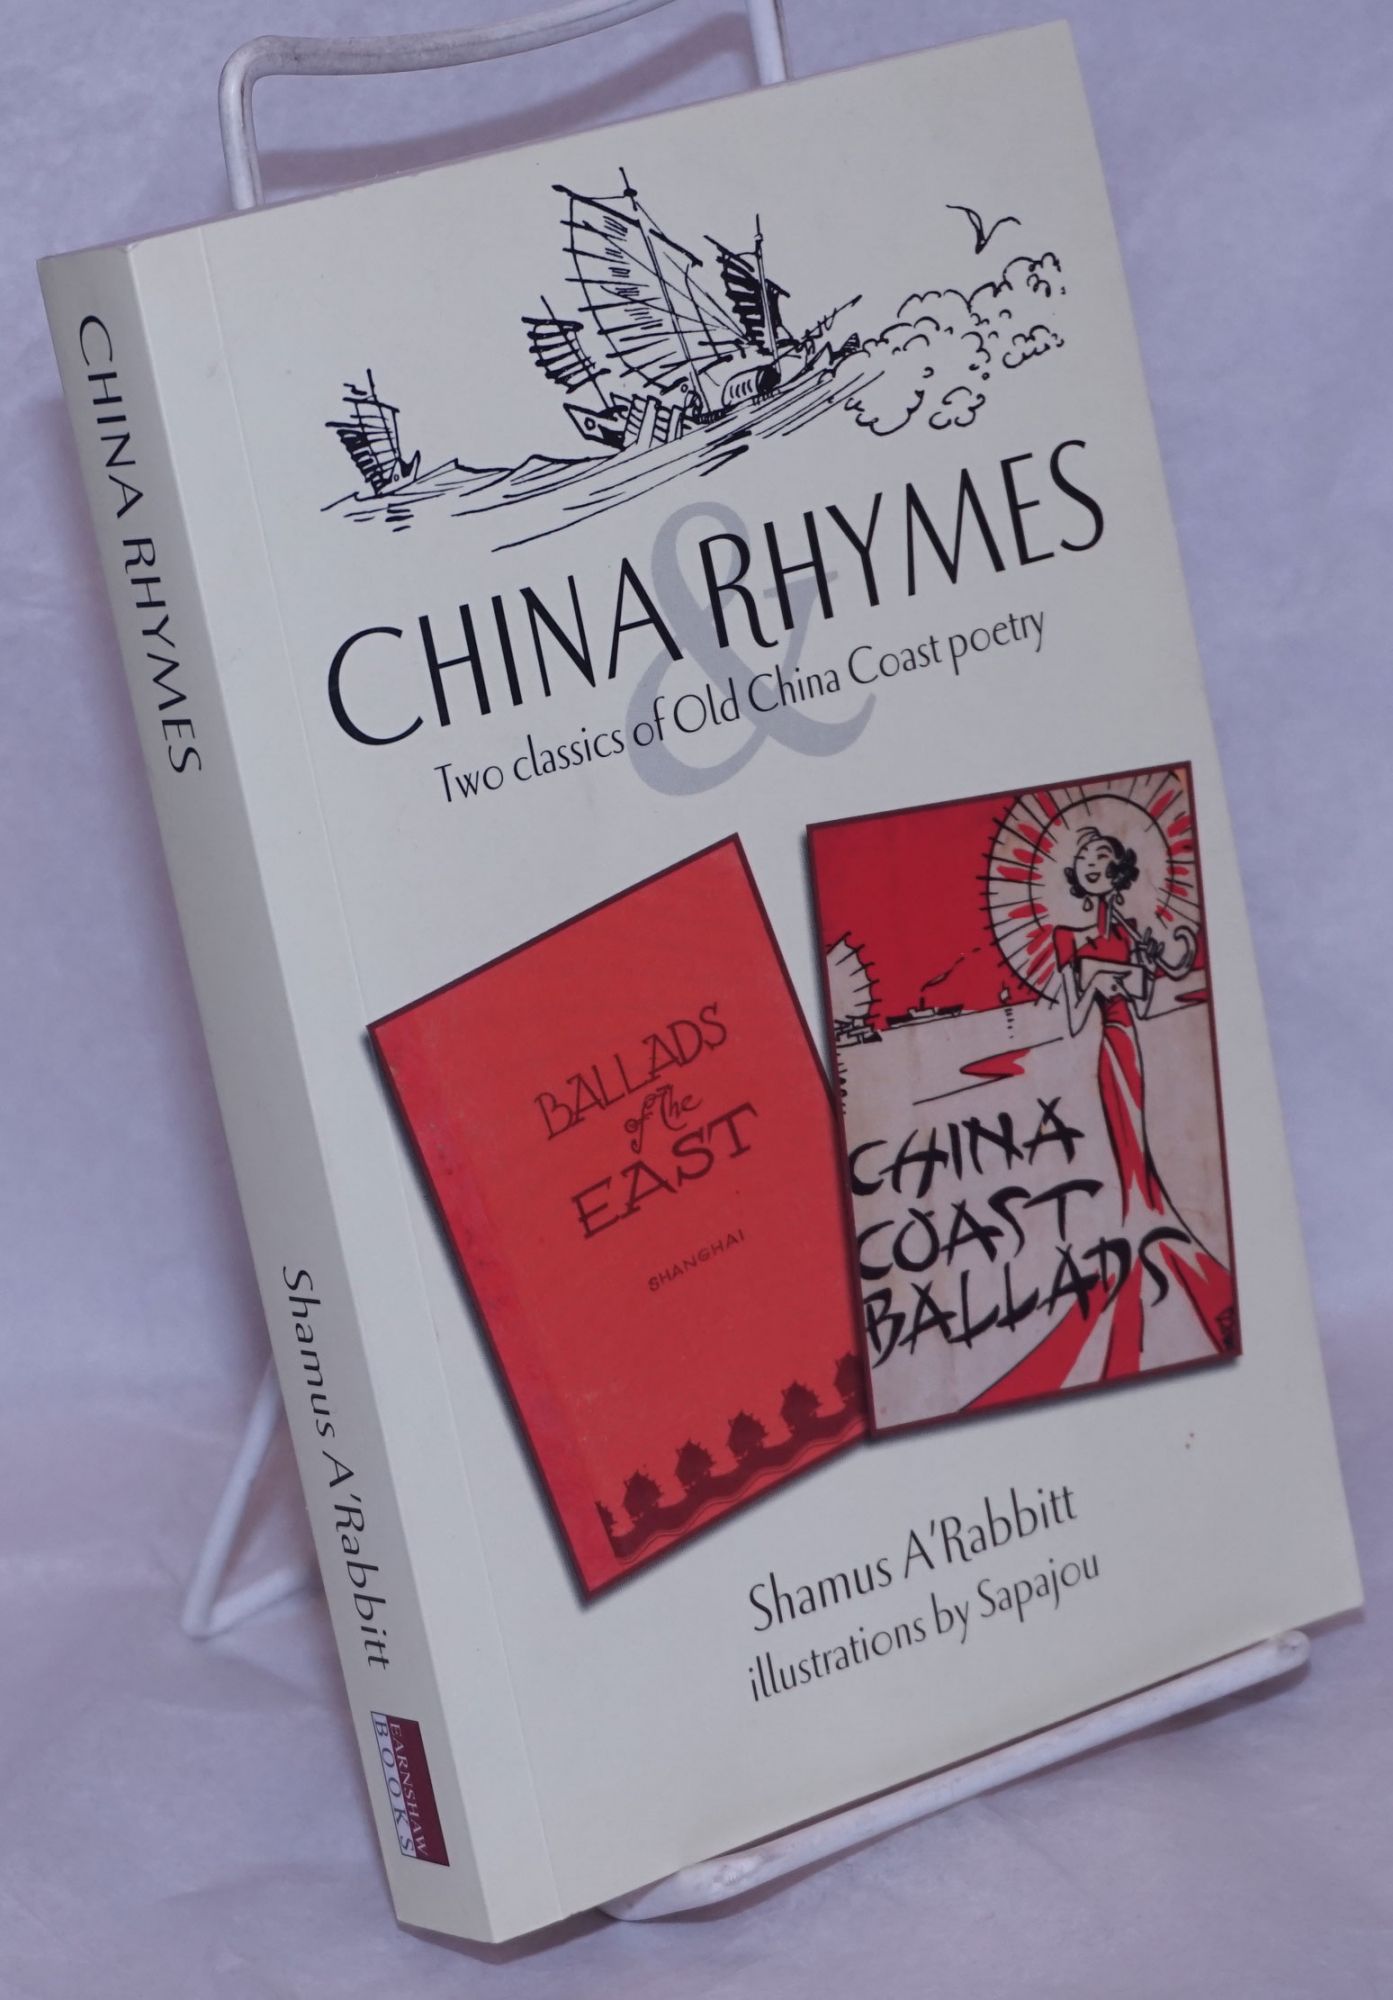 China Rhymes: Two classics of Old China Coast Poetry - A'Rabbitt, Shamus; illustrations by Sapajou [Georgii Avksent'ievich Sapojnikoff]; foreword by Andrew Chubb